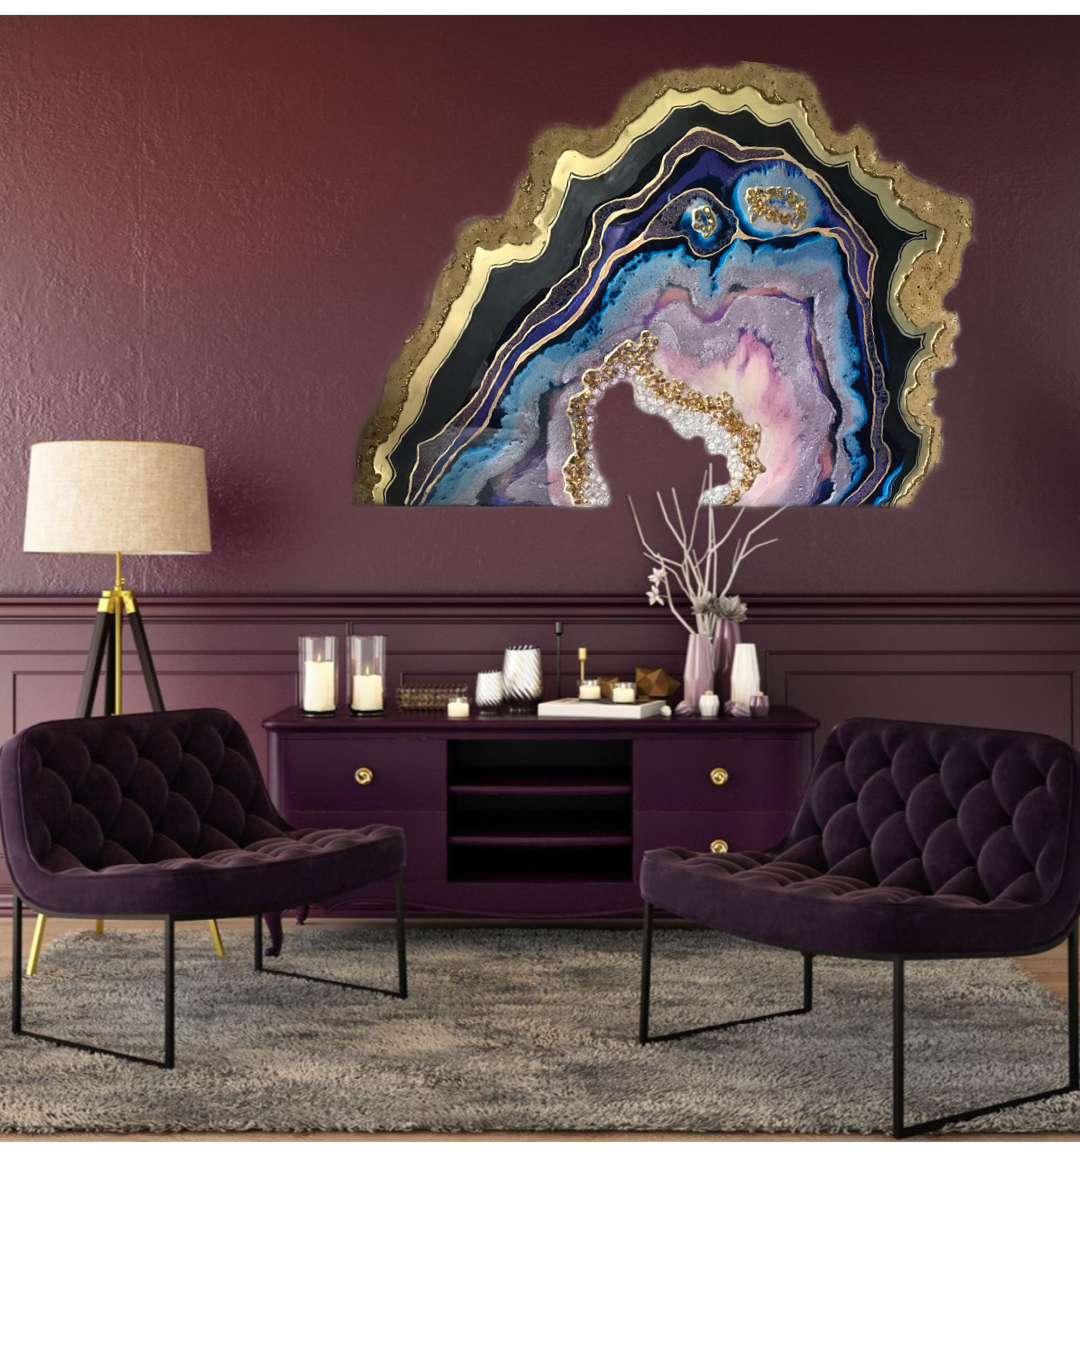 6 Purple and Gold Geode. Crystal Agate. Original Artwork. 120x88cm